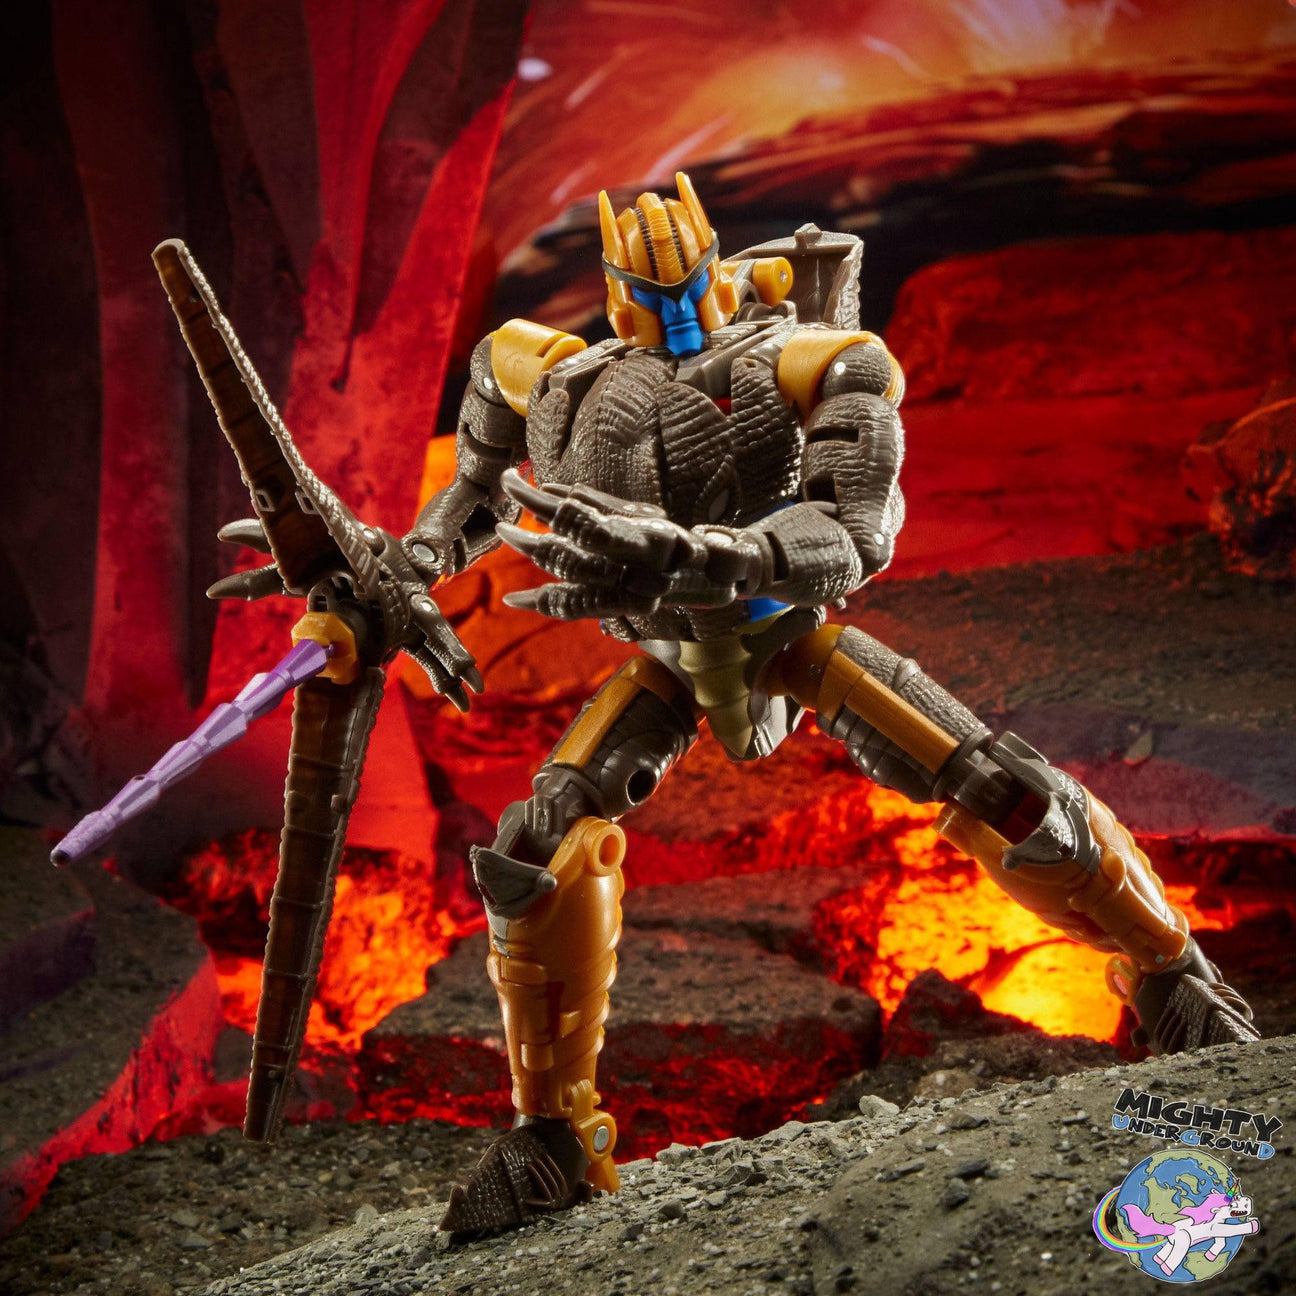 Transformers Generations: Dinobot - Voyager Class (War for Cybertron: Kingdom)-Actionfiguren-Hasbro-Mighty Underground